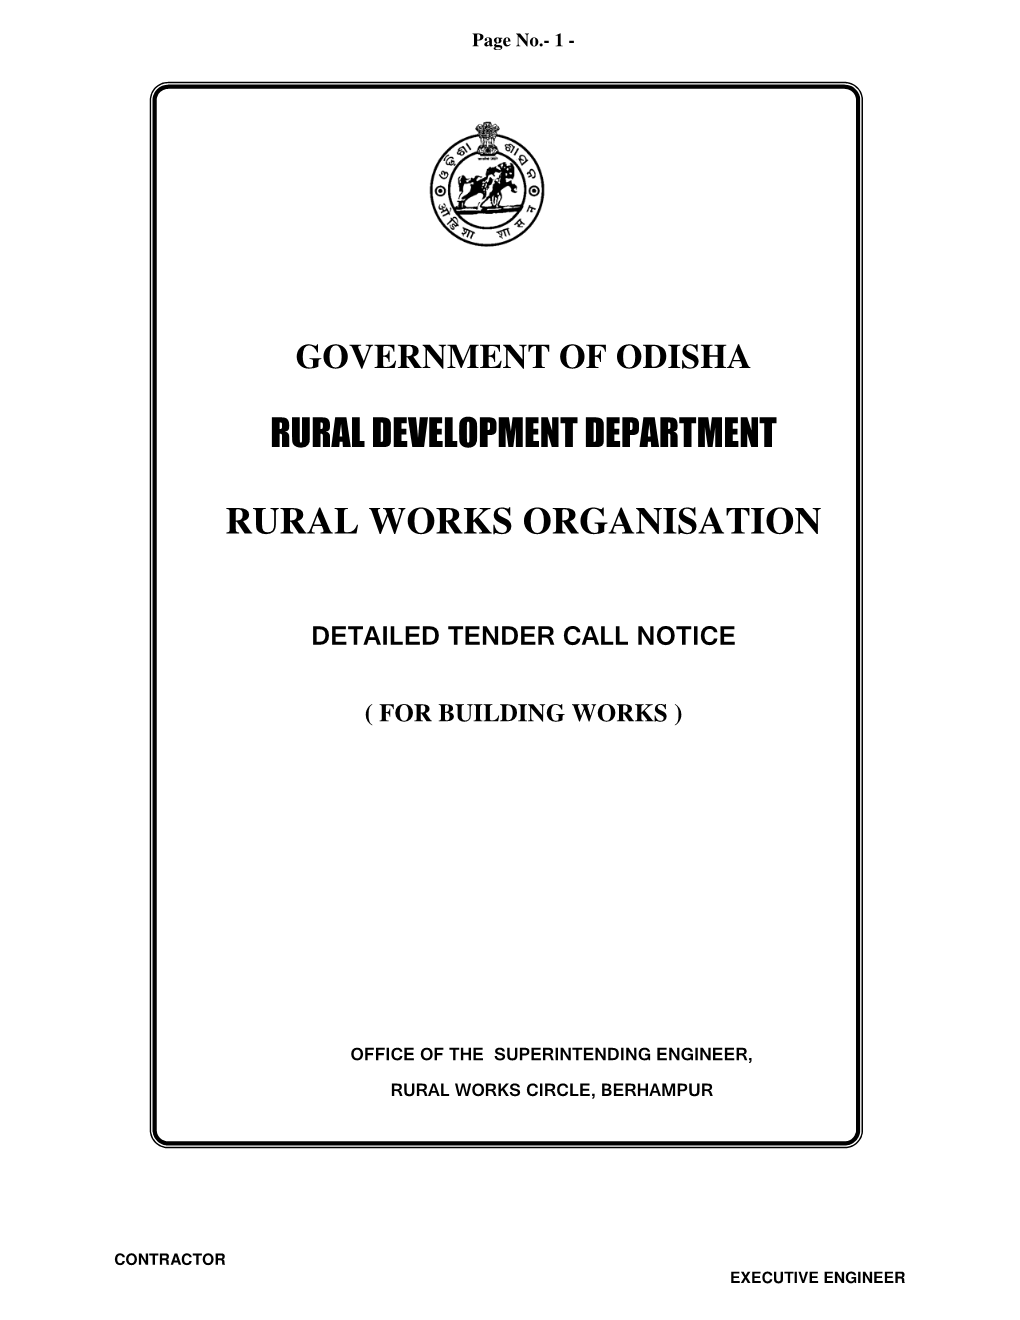 Rural Development Department Rural Works